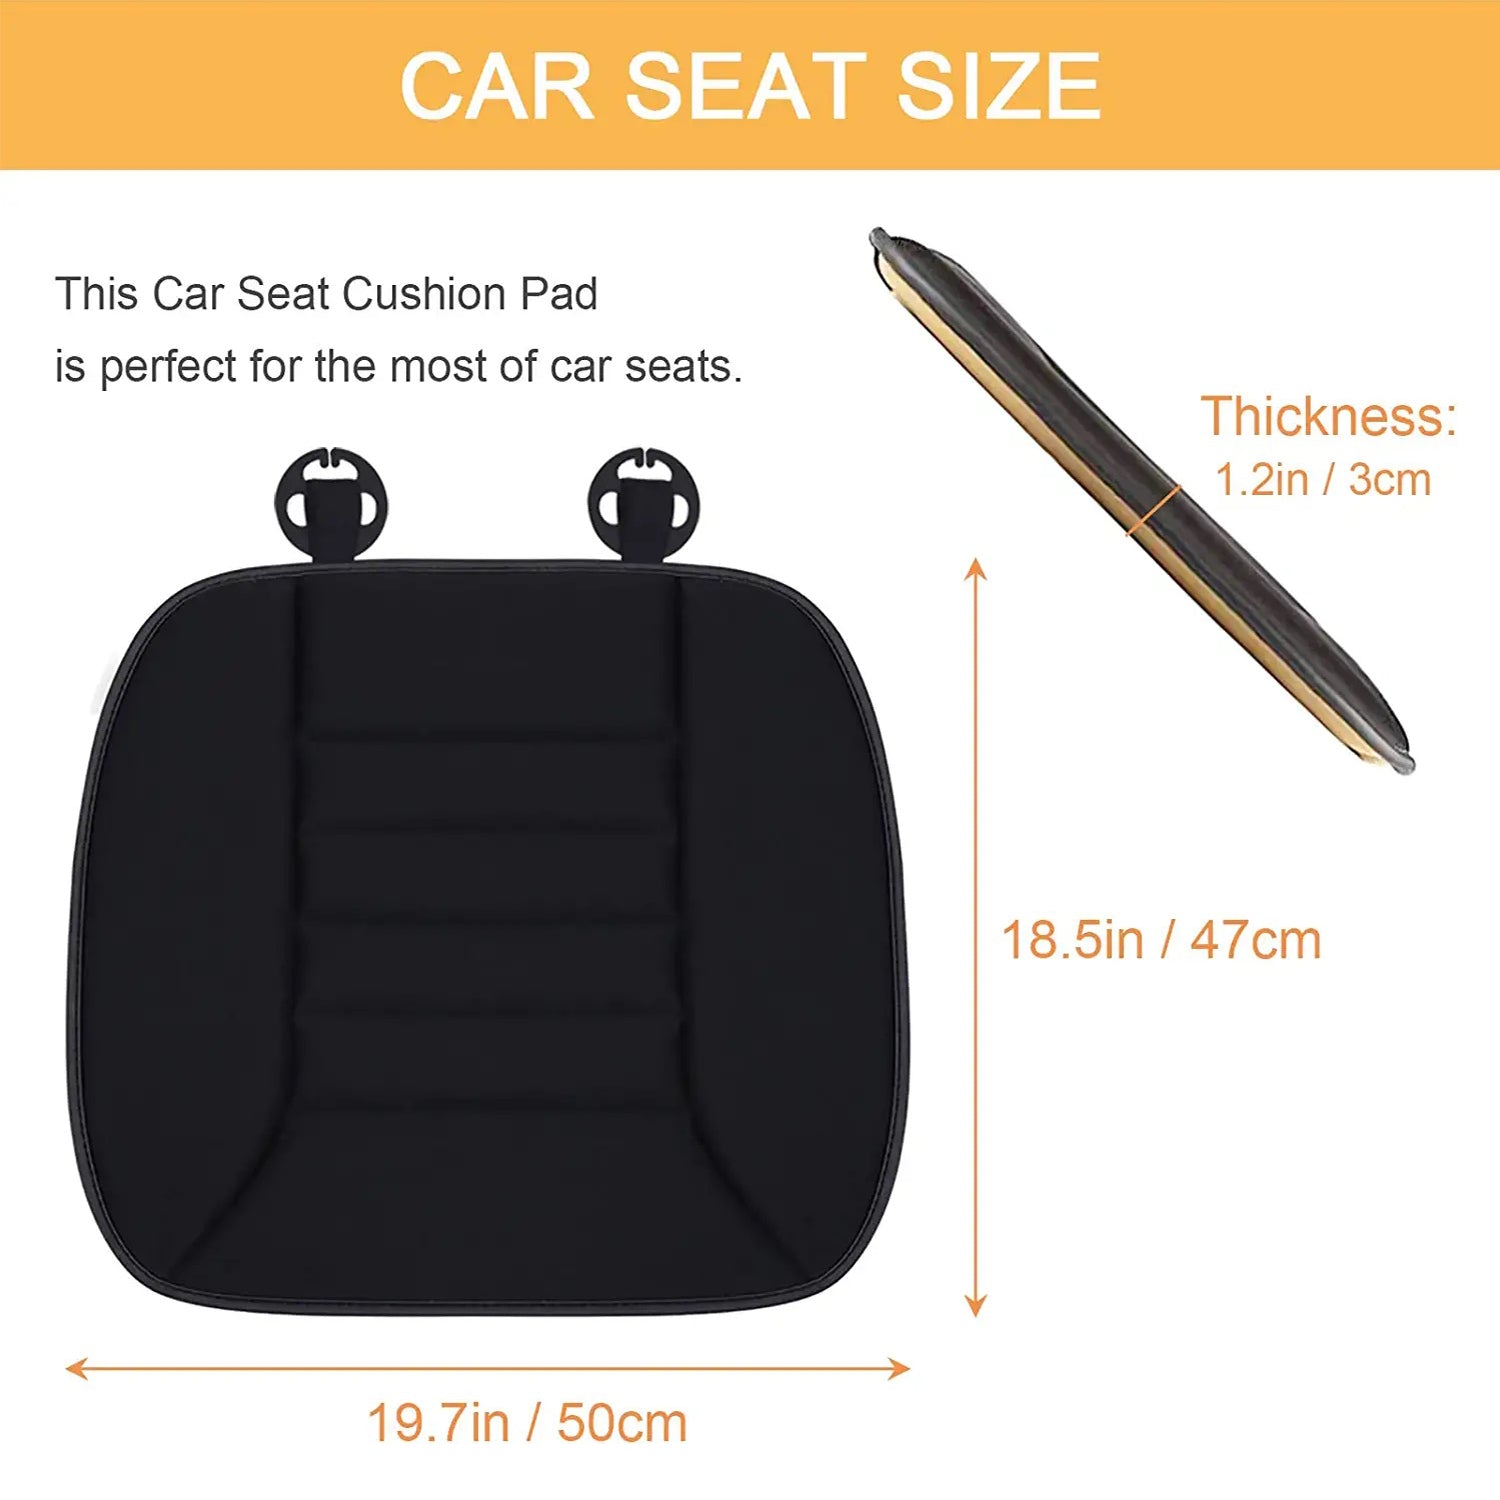 Car Seat Cushion with 1.2inch Comfort Memory Foam, Custom-Fit For Car, Seat Cushion for Car and Office Chair DLJG247